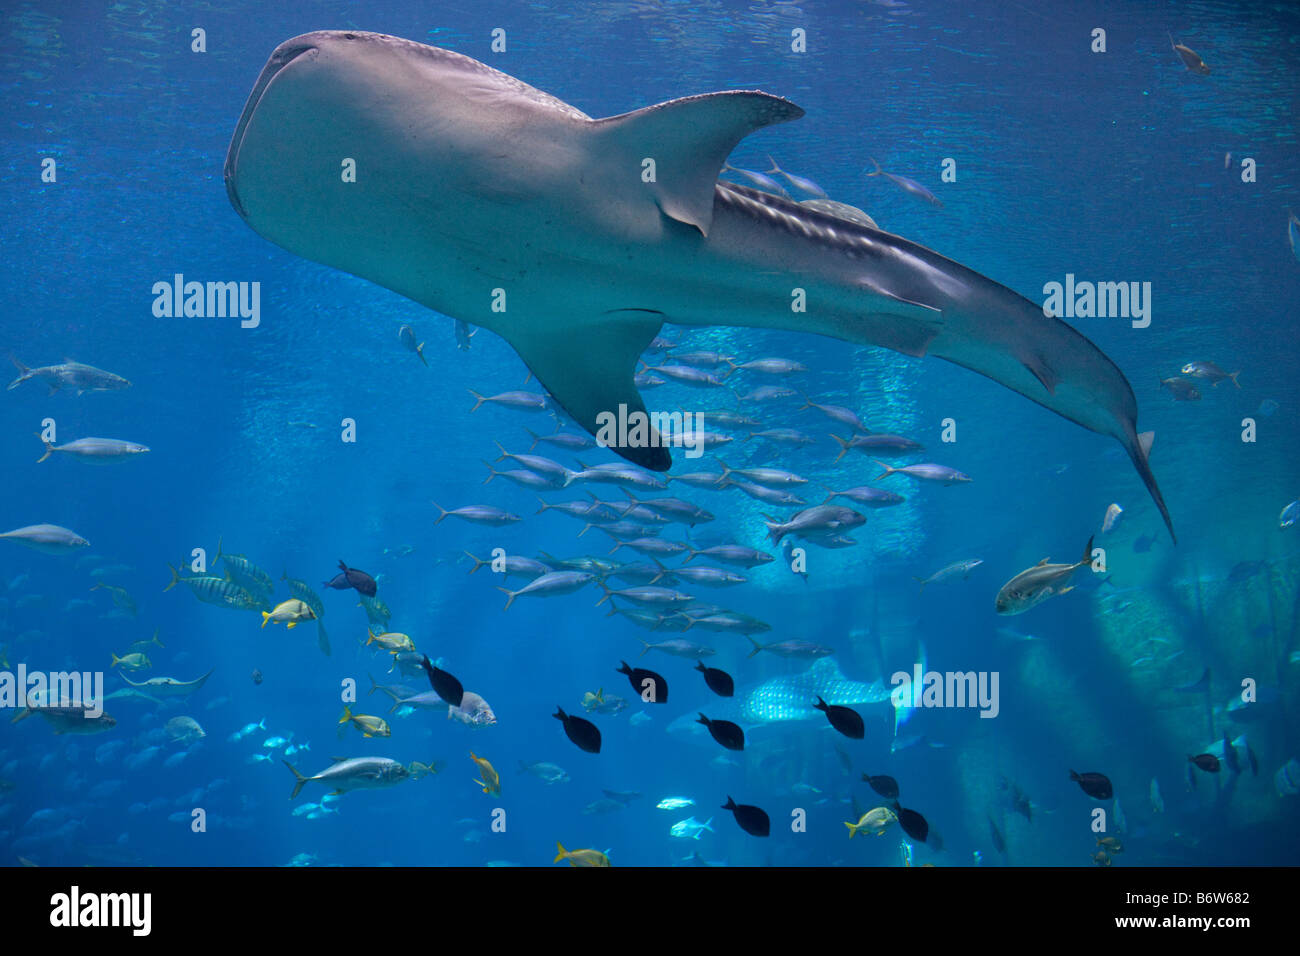 A giant Whale Shark at the Georgia Aquarium in Atlanta, Georgia swim through the largest fish tank in the world Stock Photo